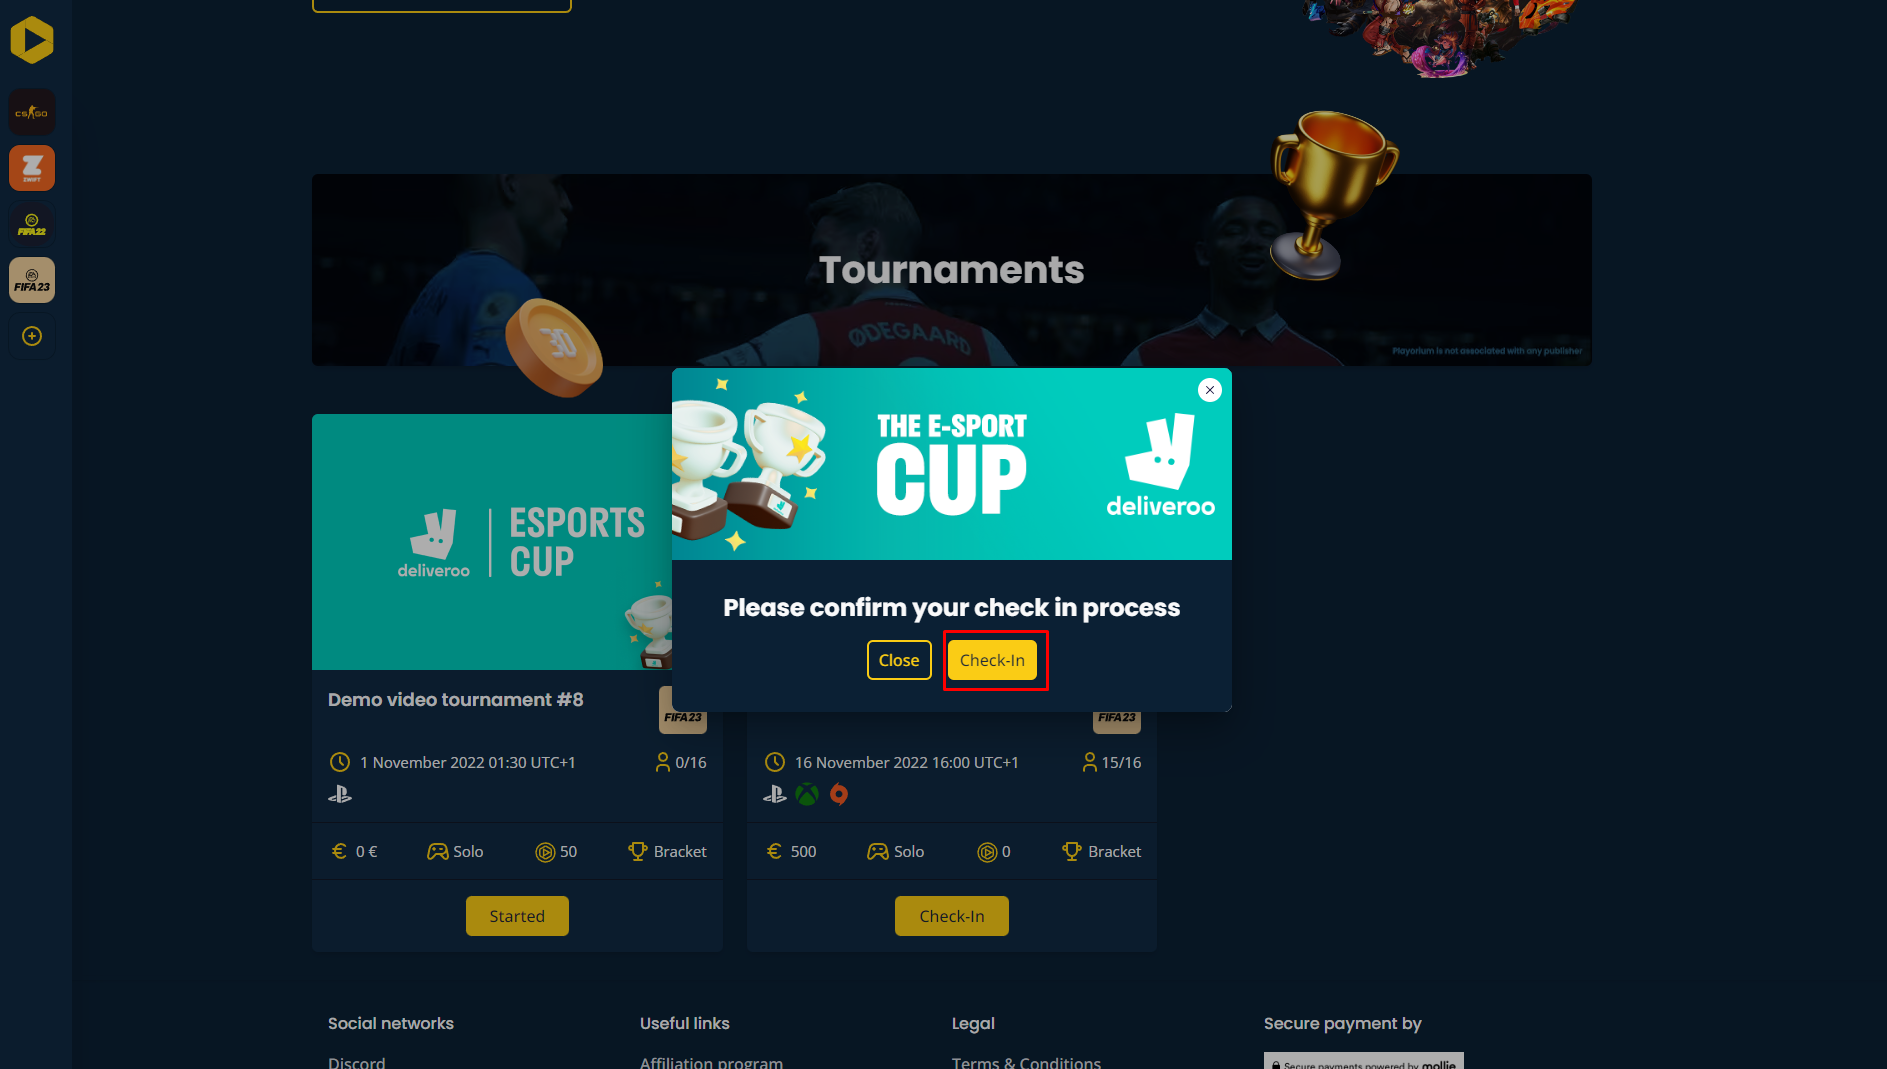 tournament_checkin_card_tournament_2.png